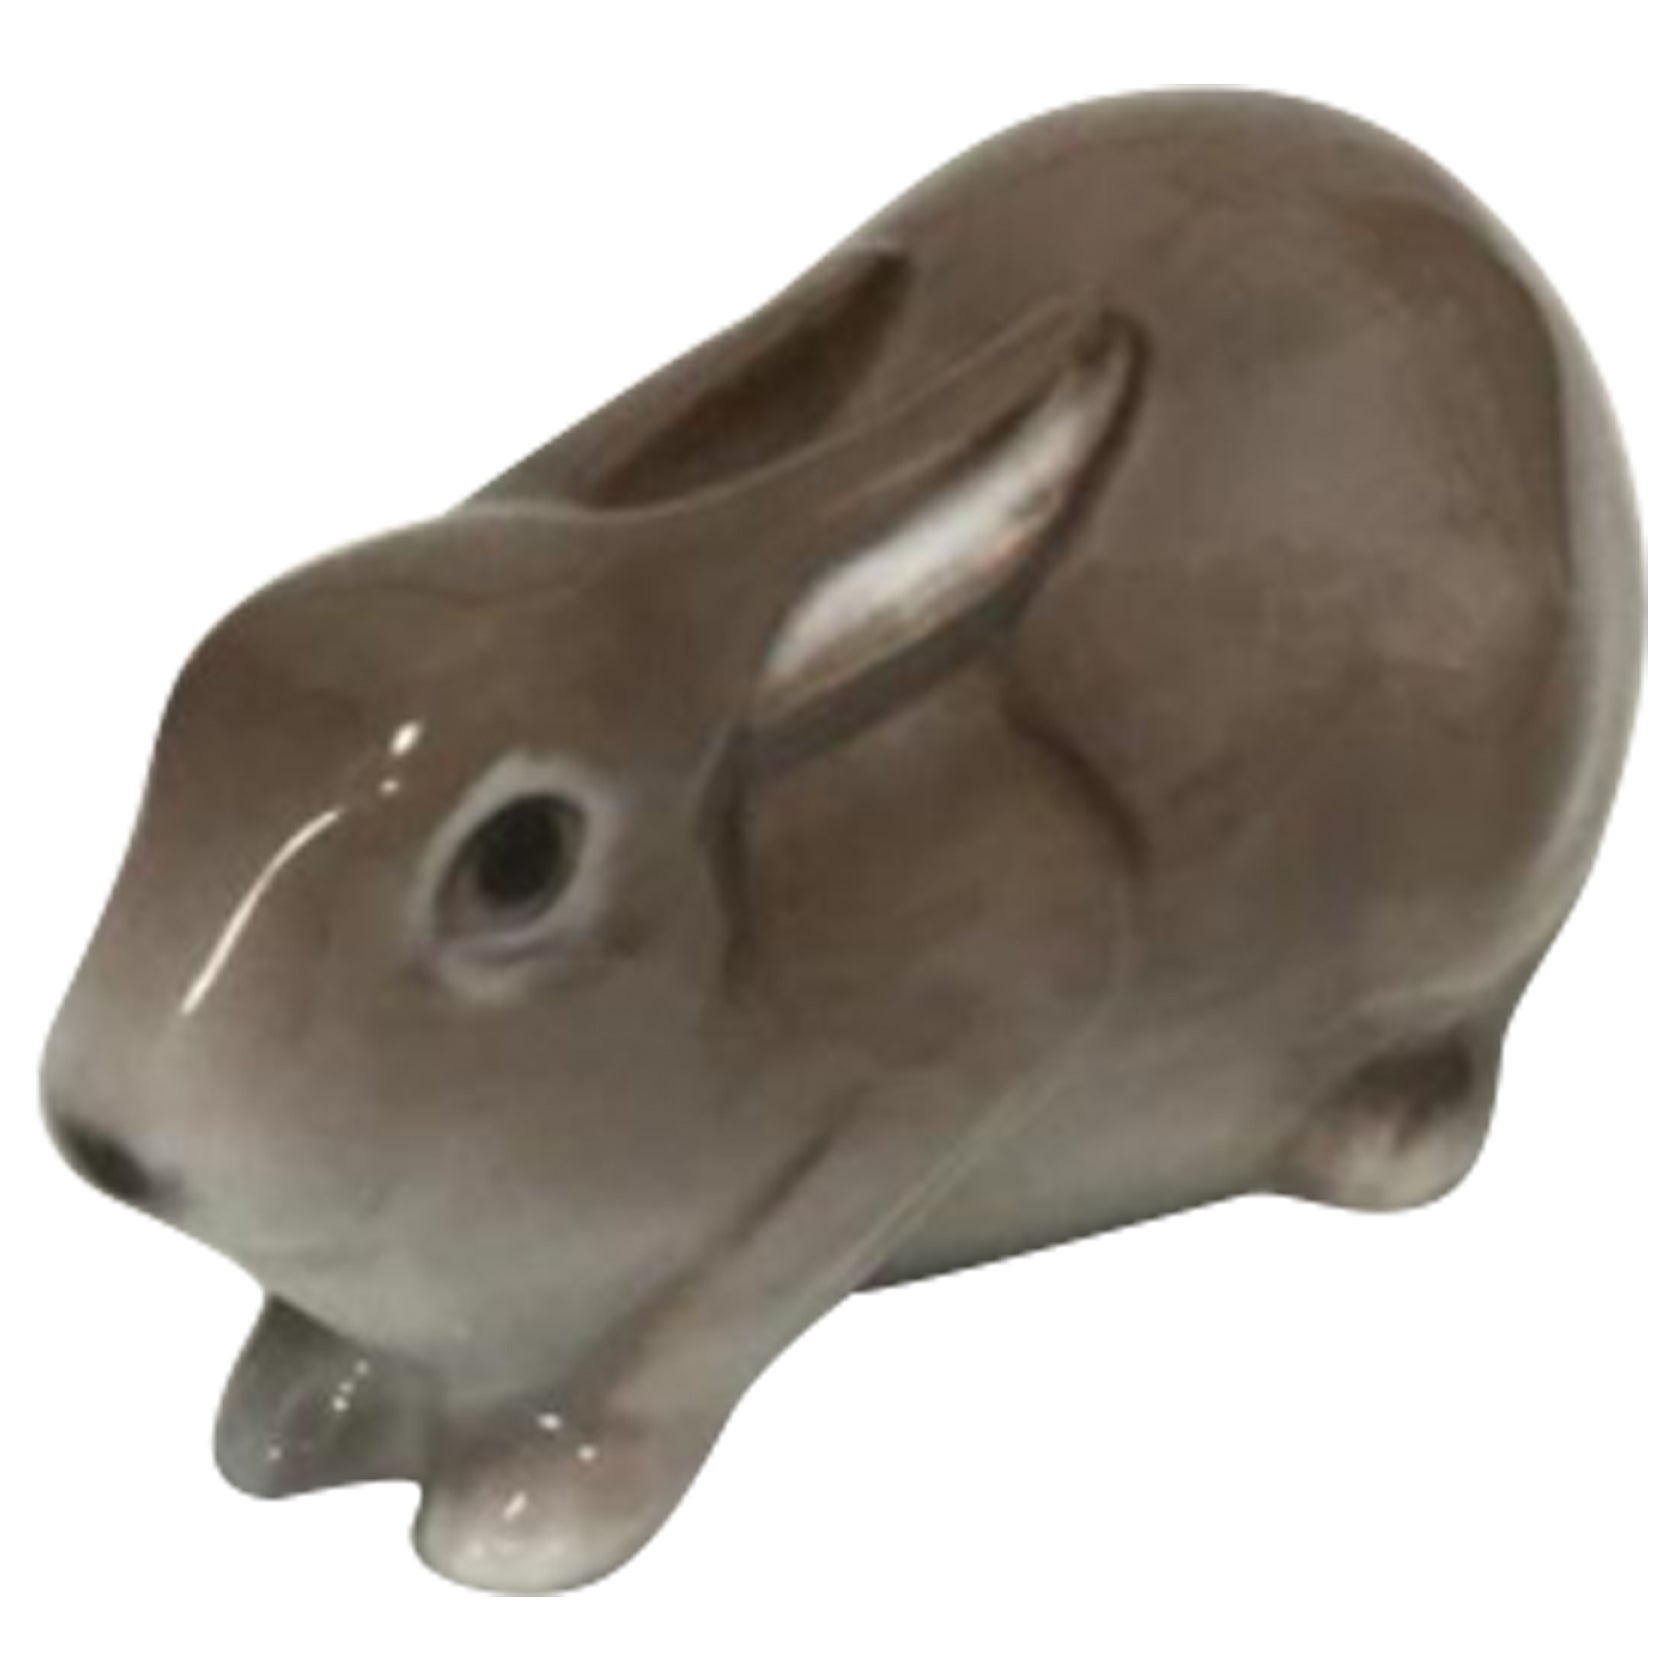 Bing & Grondahl Figurine of Rabbit No 2421 For Sale